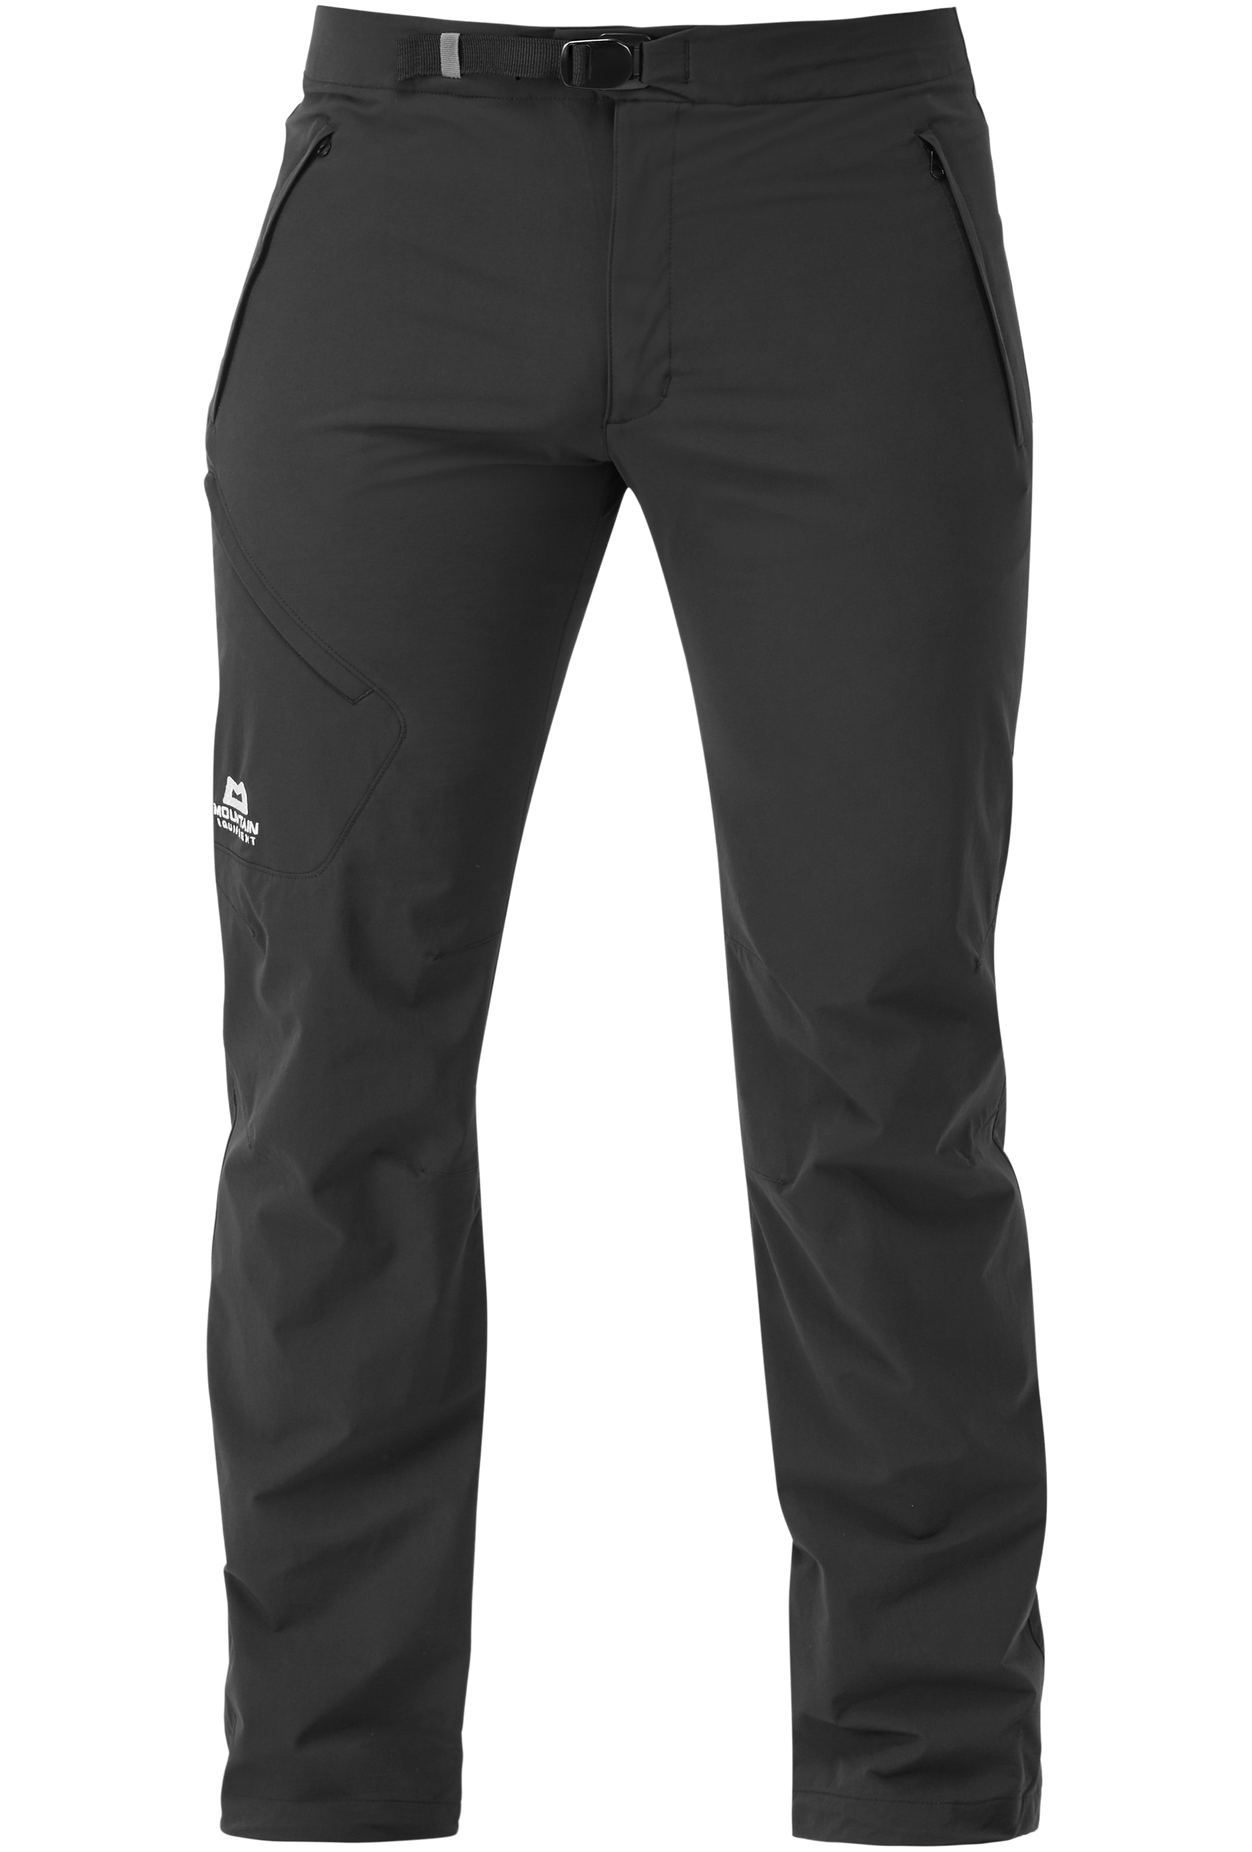 Mountain Equipment pánské softshellové kalhoty Comici Pant Barva: black/black, Velikost: 38/XXL